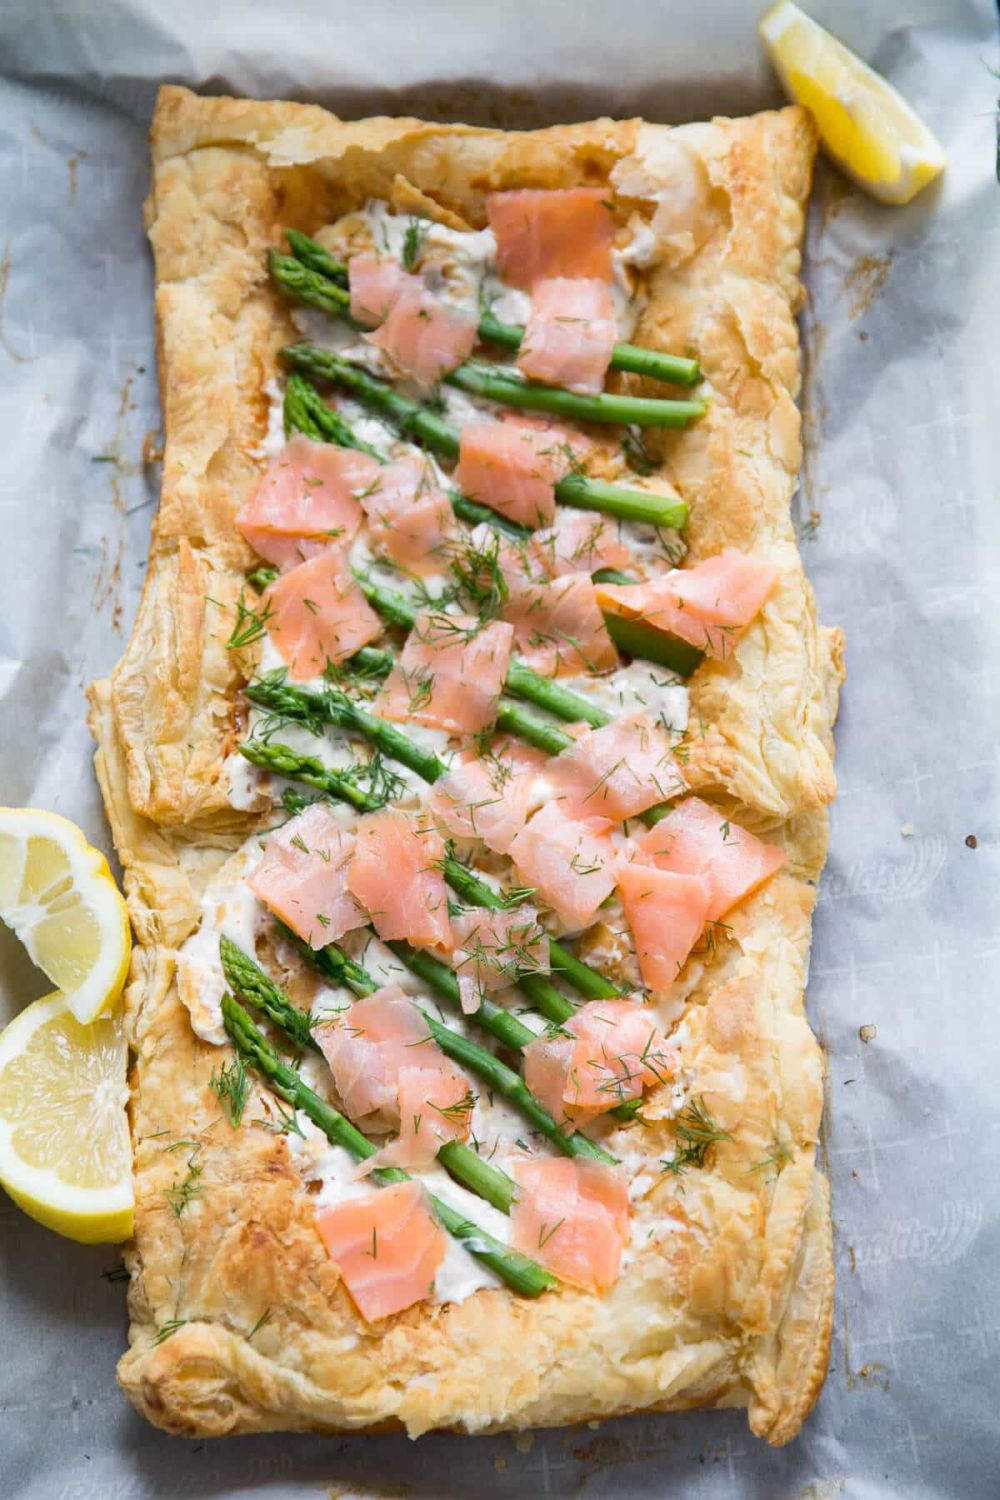 Salmon and Asparagus Recipe